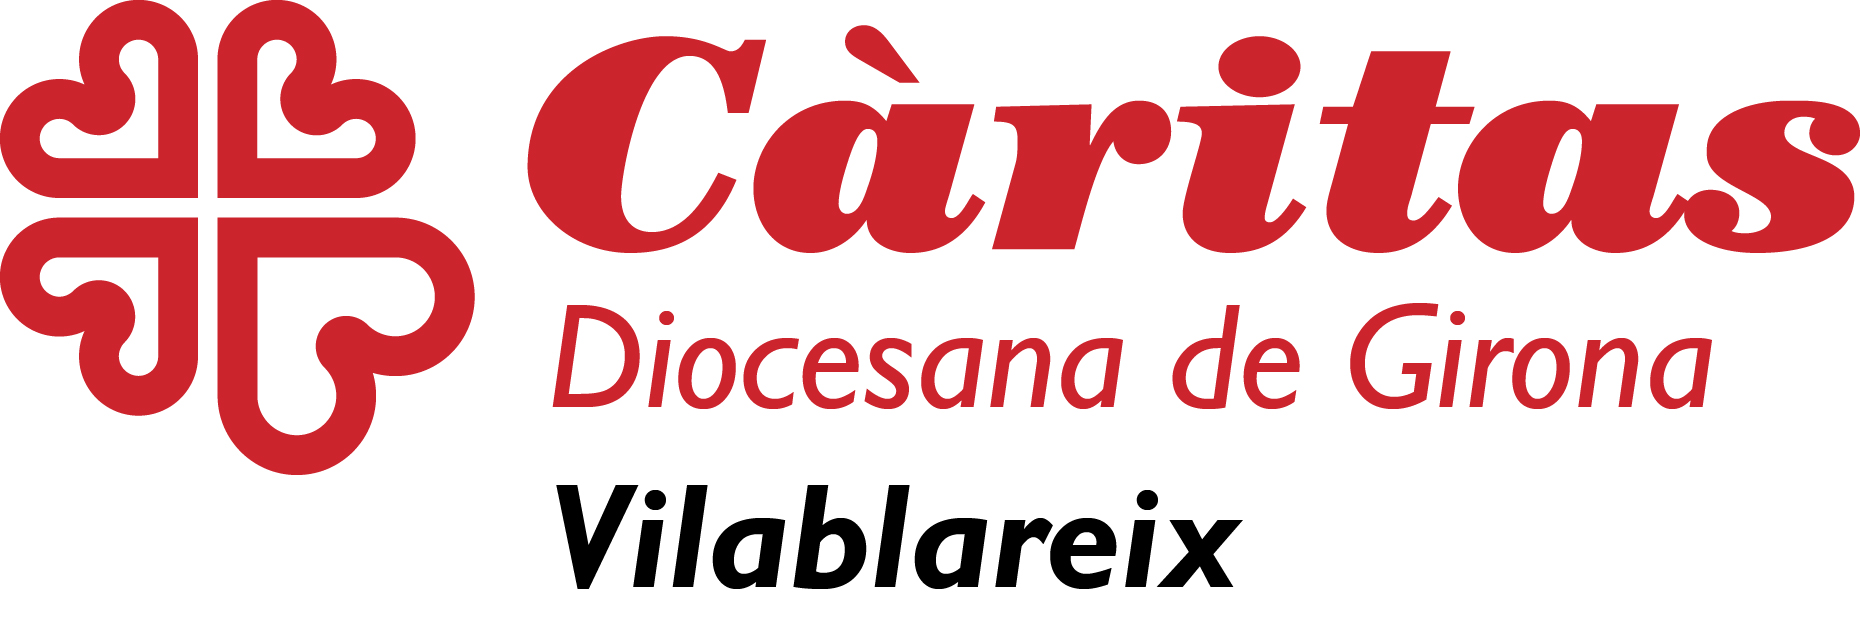  CÀRITAS Diocesana de Girona - Vilablareix